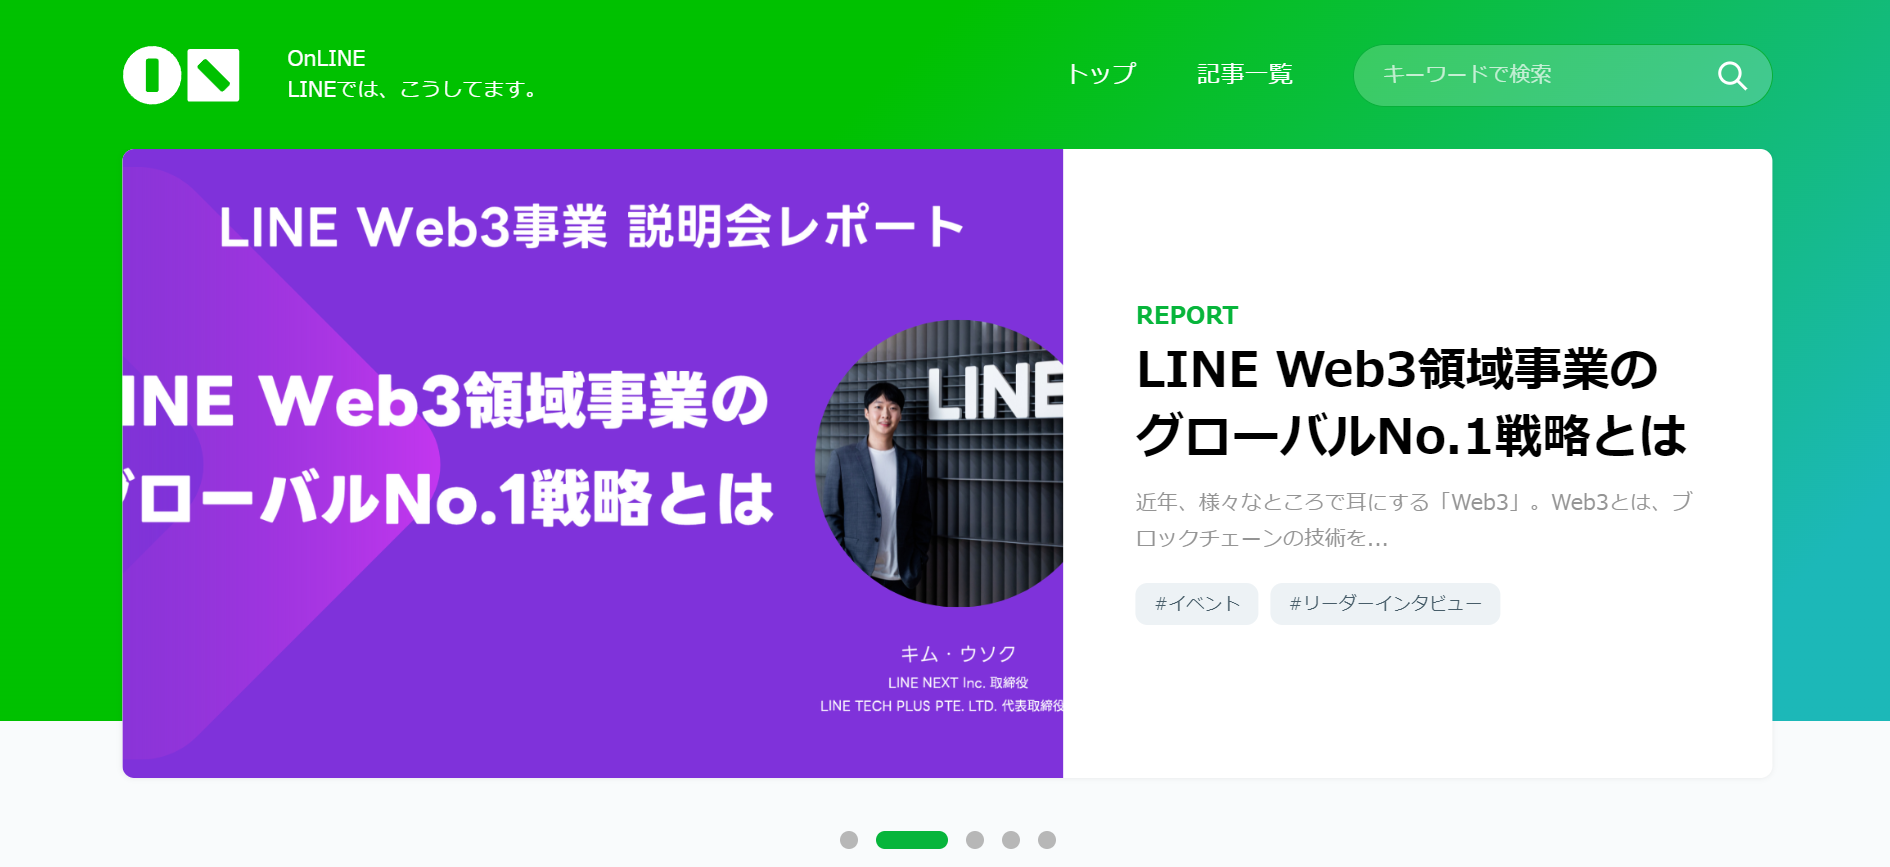 成功事例9．OnLINE（LINE株式会社）